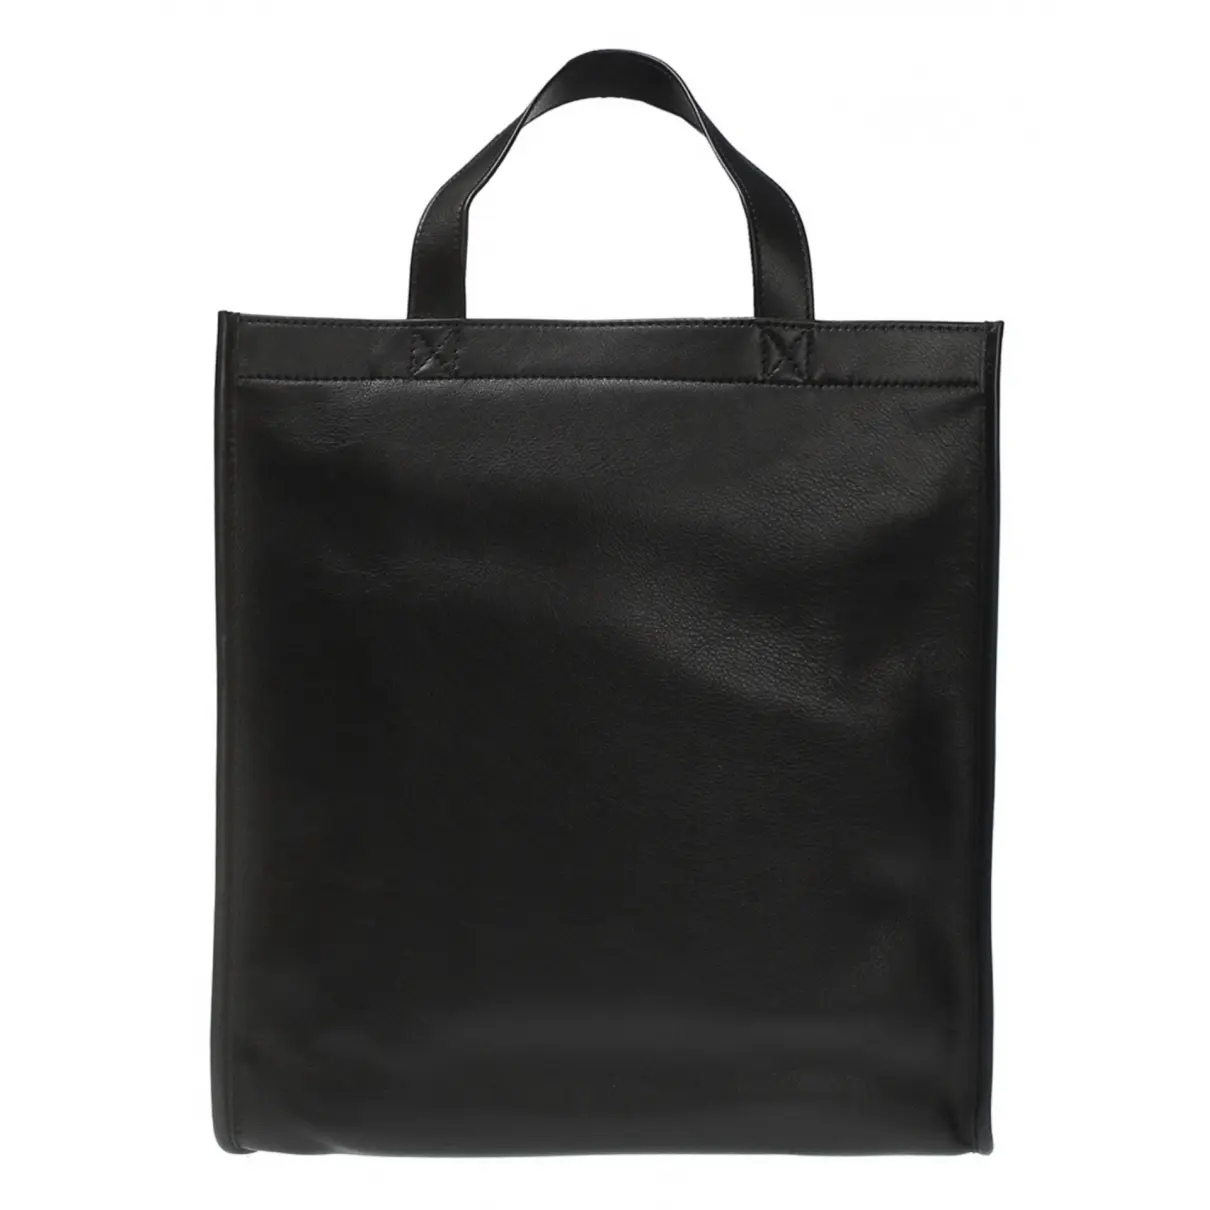 Buy Balenciaga Market Shopper leather tote online